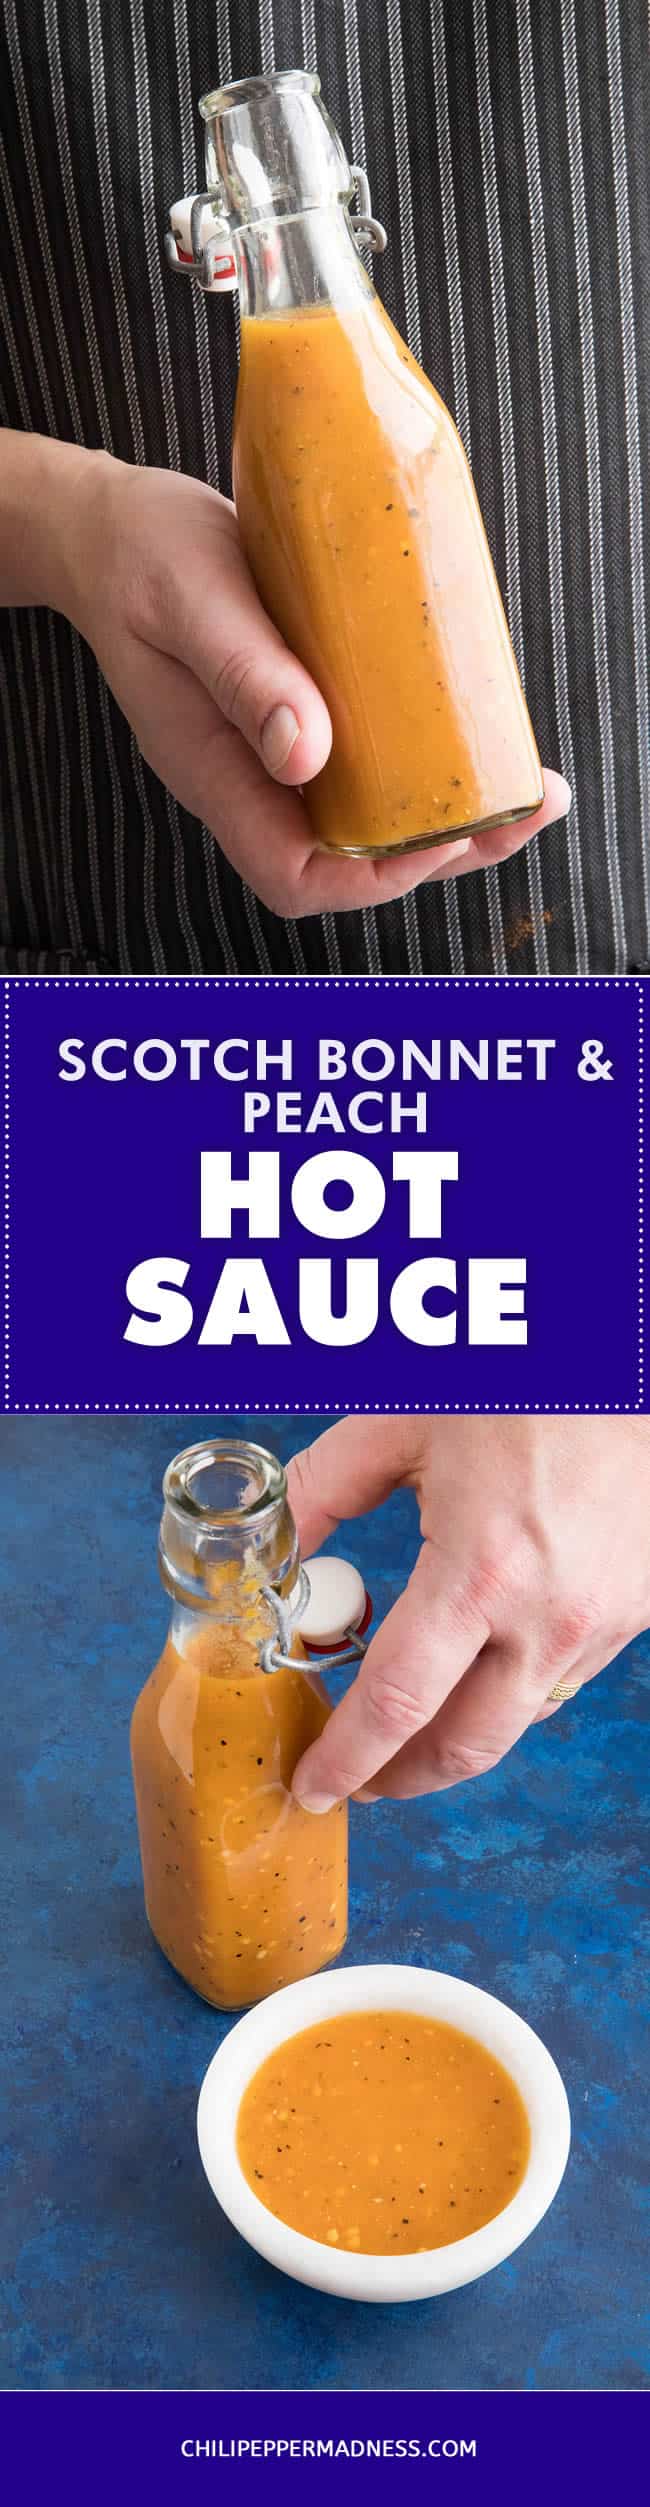 Peach-Scotch Bonnet Hot Sauce - Recipe | ChiliPepperMadness.com #hotsauce #ScotchBonnets #spicy #spicyfood #chilipeppers